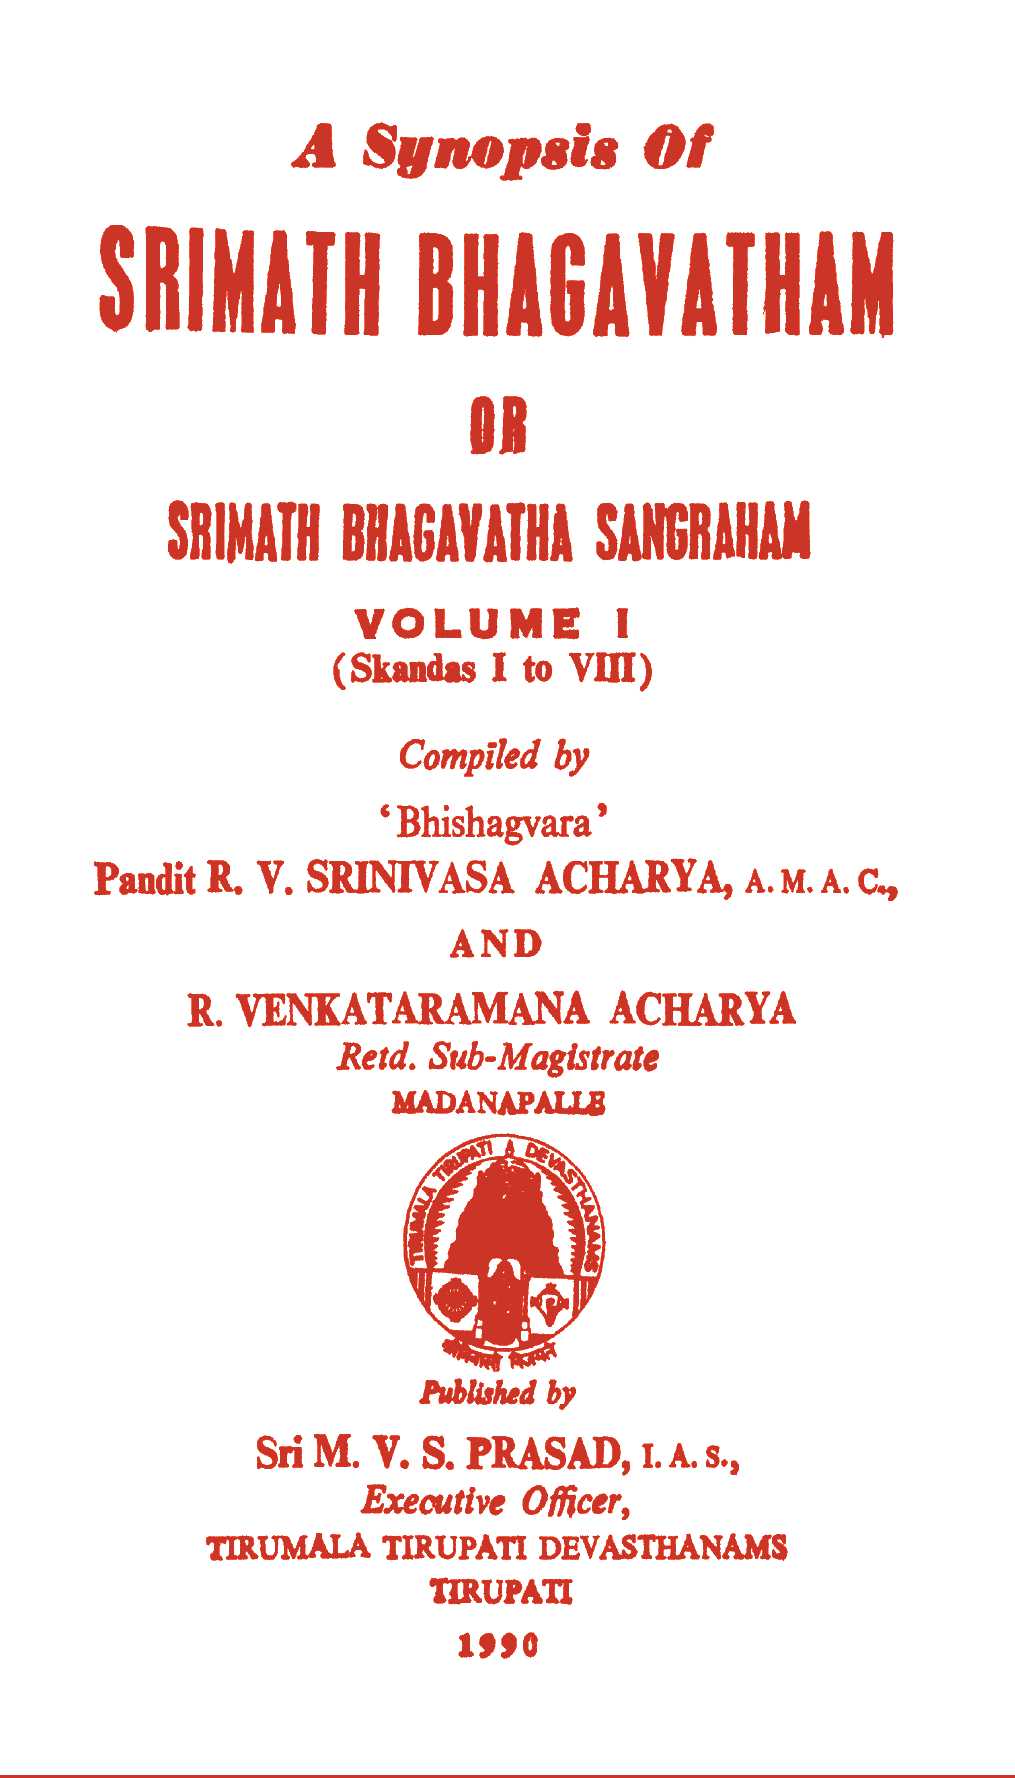 A Synopsis Of Srimath Bhagavatam Vol I Skandas I to VIII